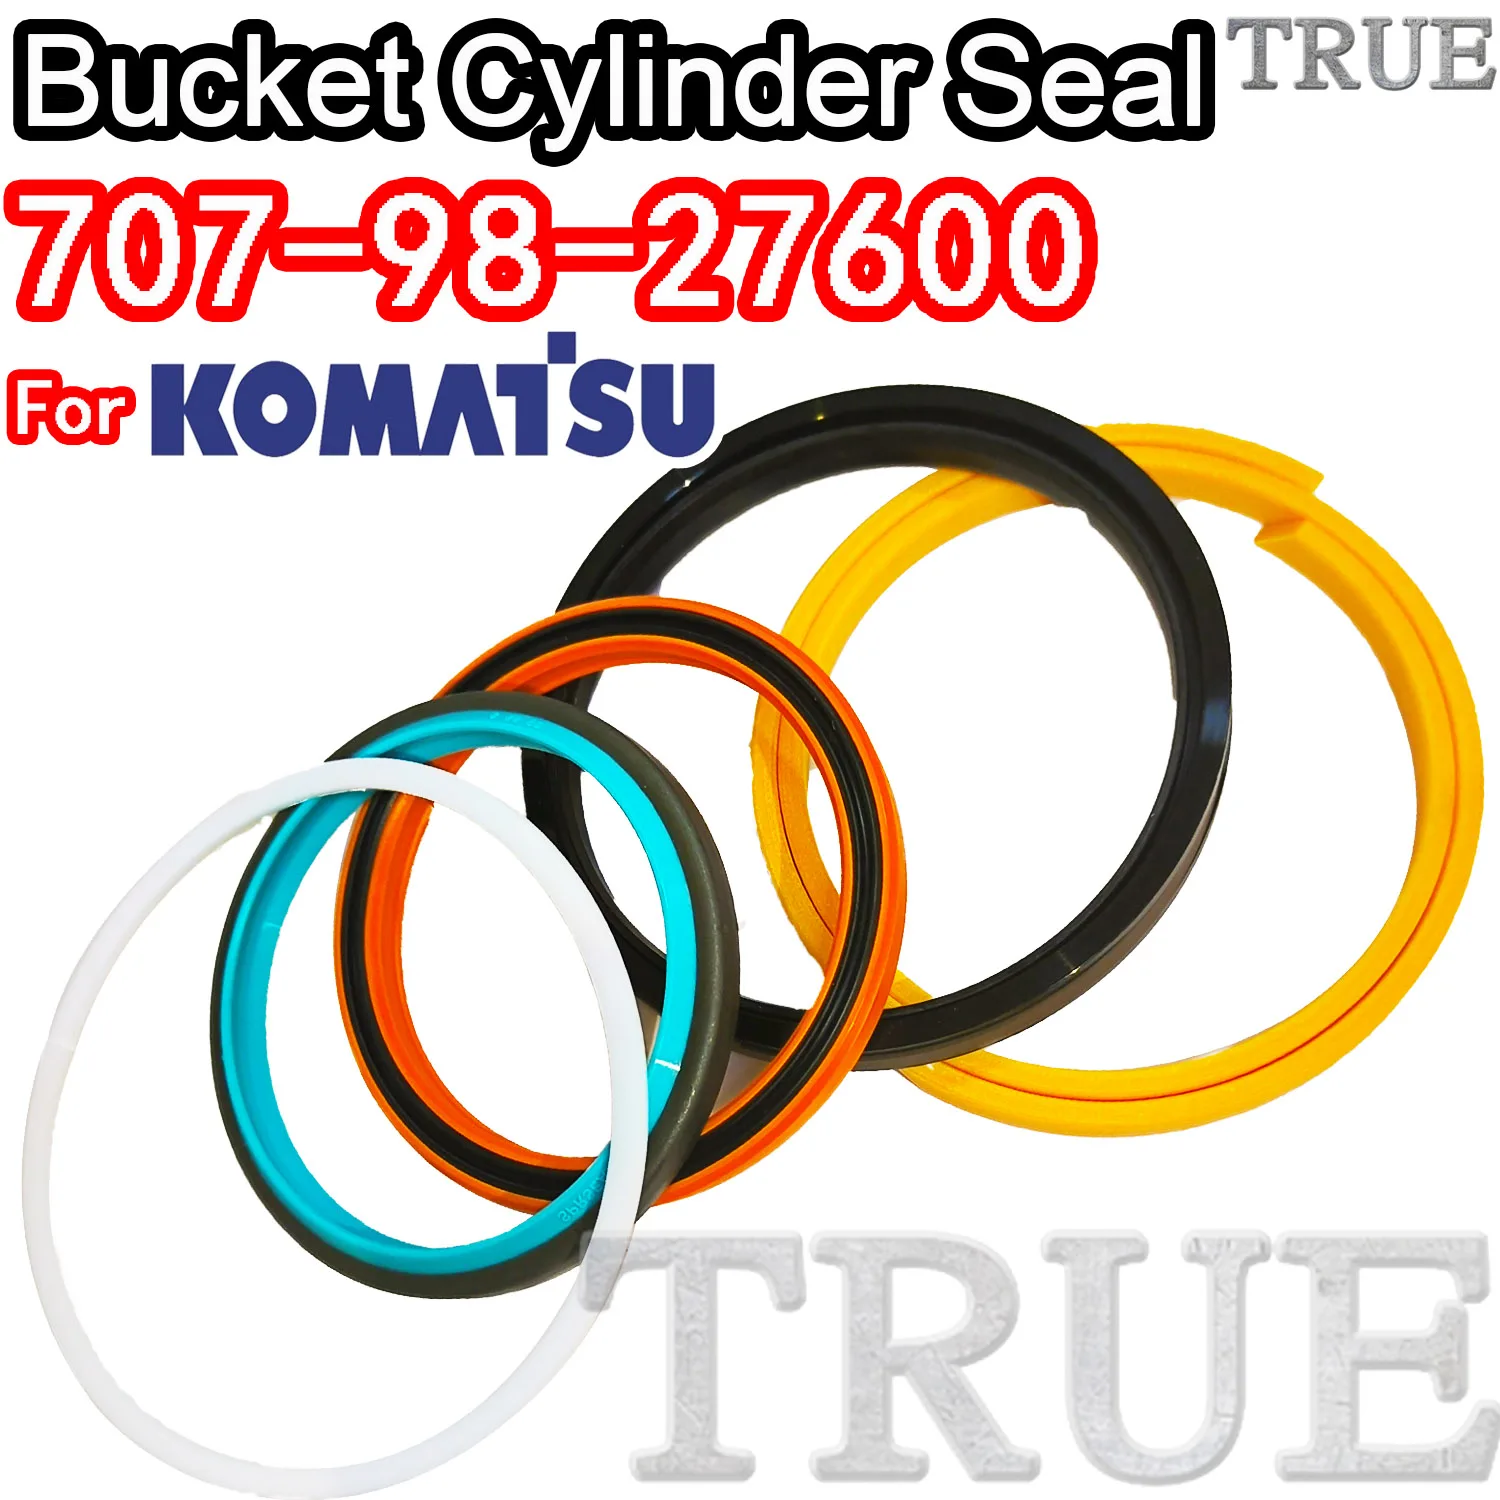 

For KOMATSU 707-98-27600 PC100 PC120 PC128UU PW128UU Bucket 7079827600 Excavator Oil Seals Kit Repair Nok Washer Skf Service